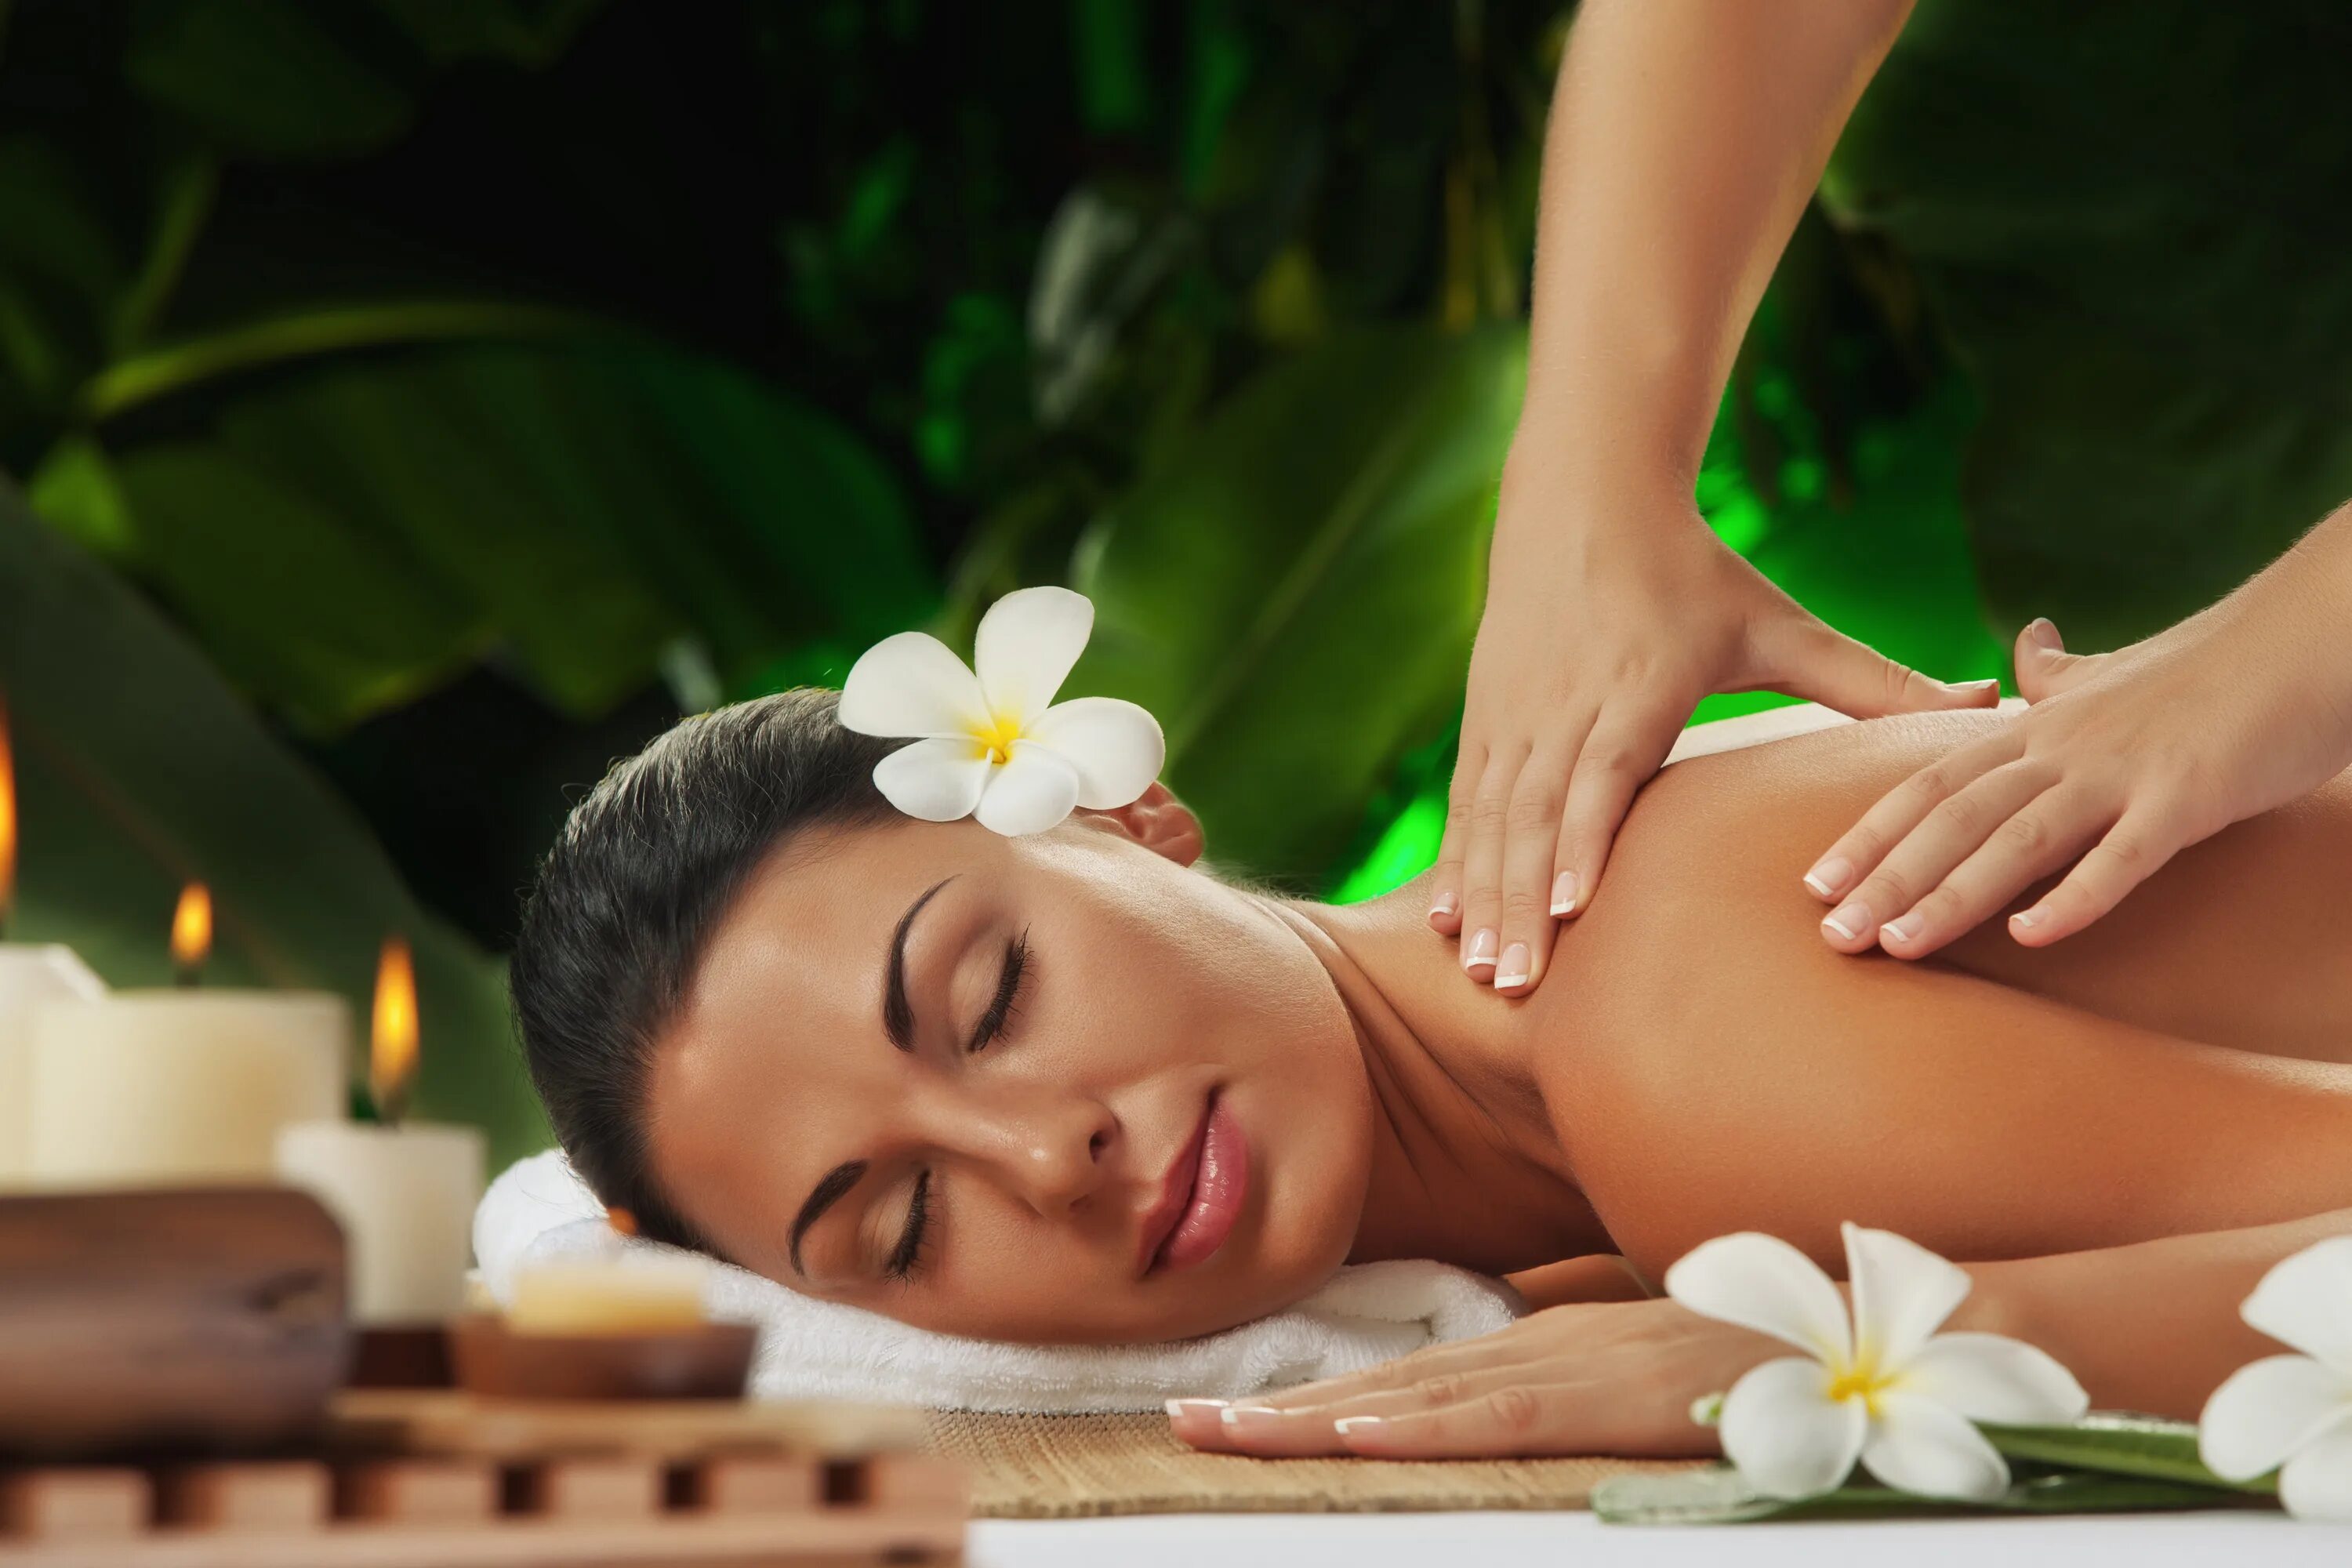 Massage o. Спа массаж. Релакс массаж. Массаж картинки. Тайский массаж.